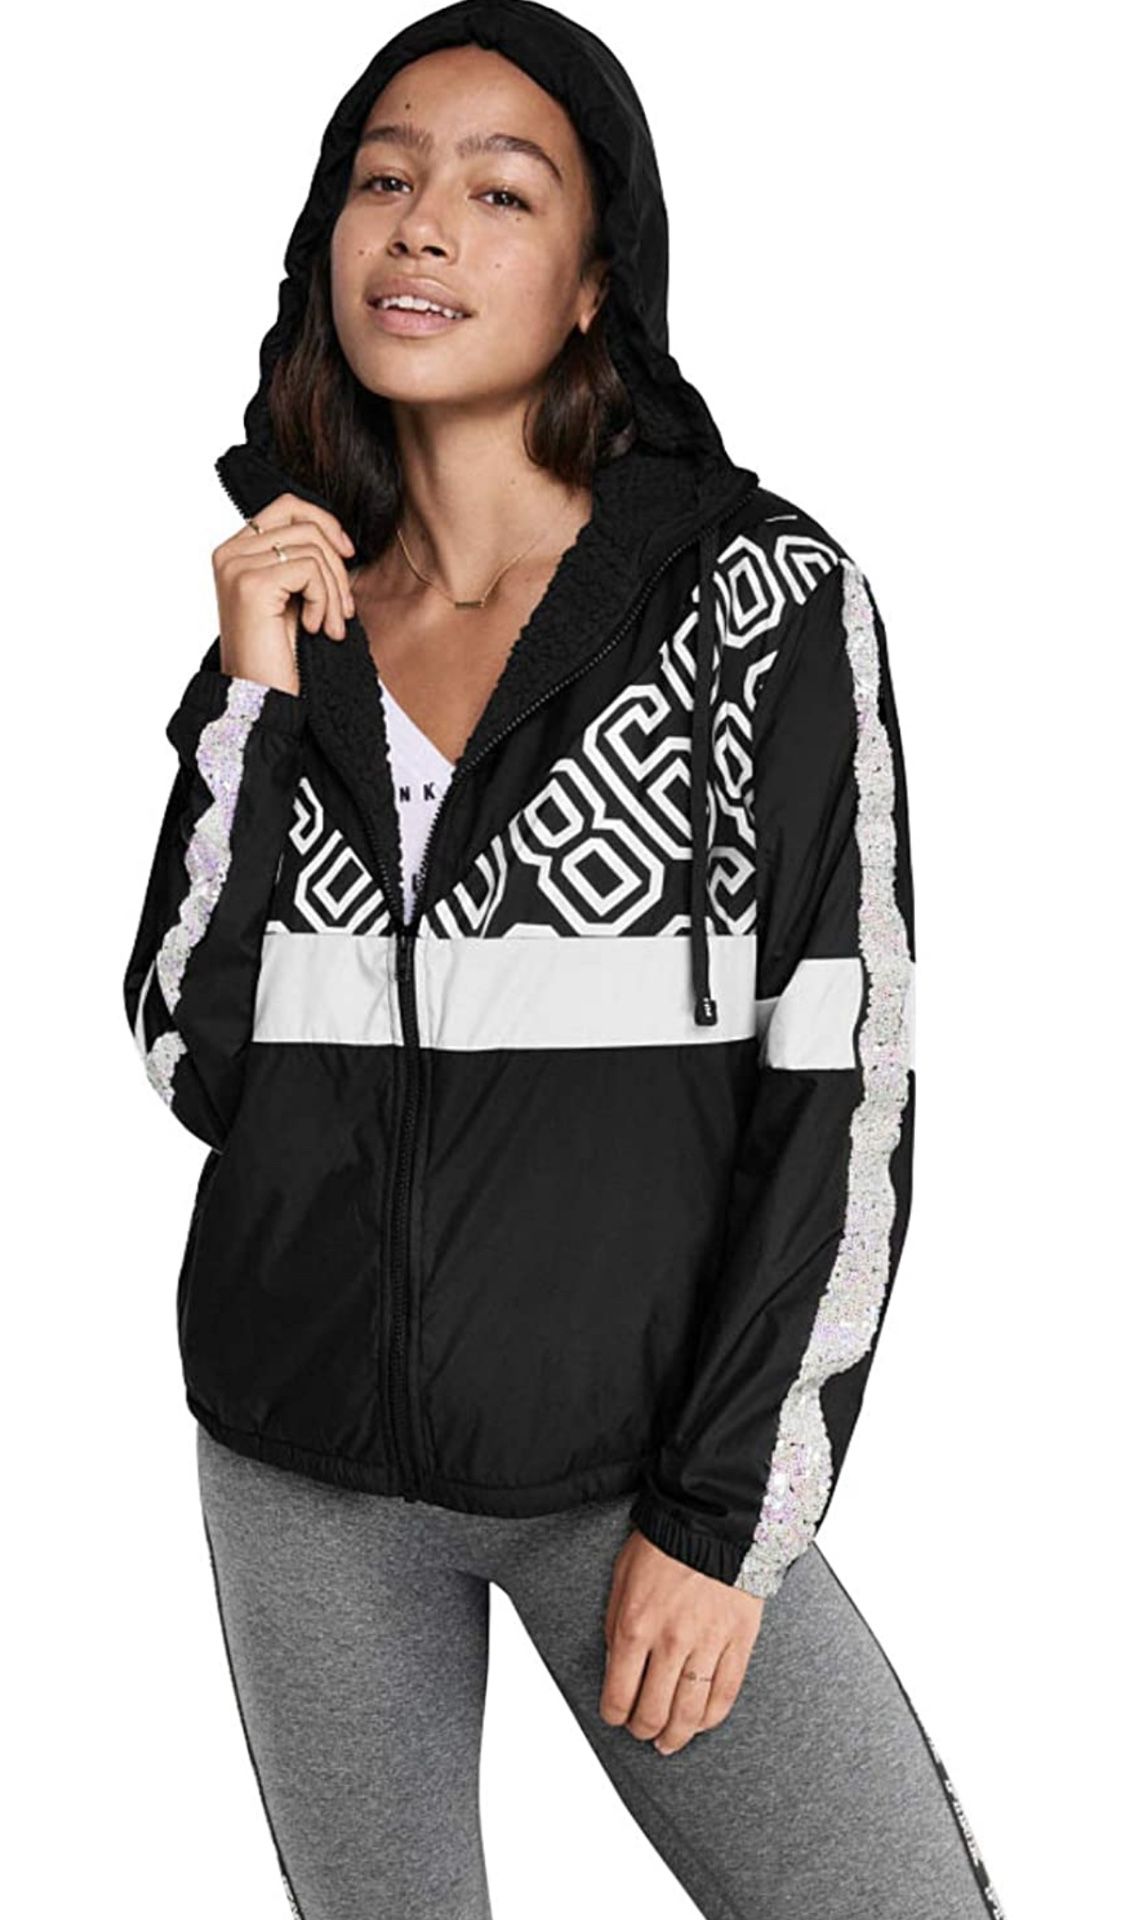 New Pink Victoria’s Secret Full Zip Sherpa Lined Jacket Anorak Windbreaker Bling NWT Dark Grey XS/S